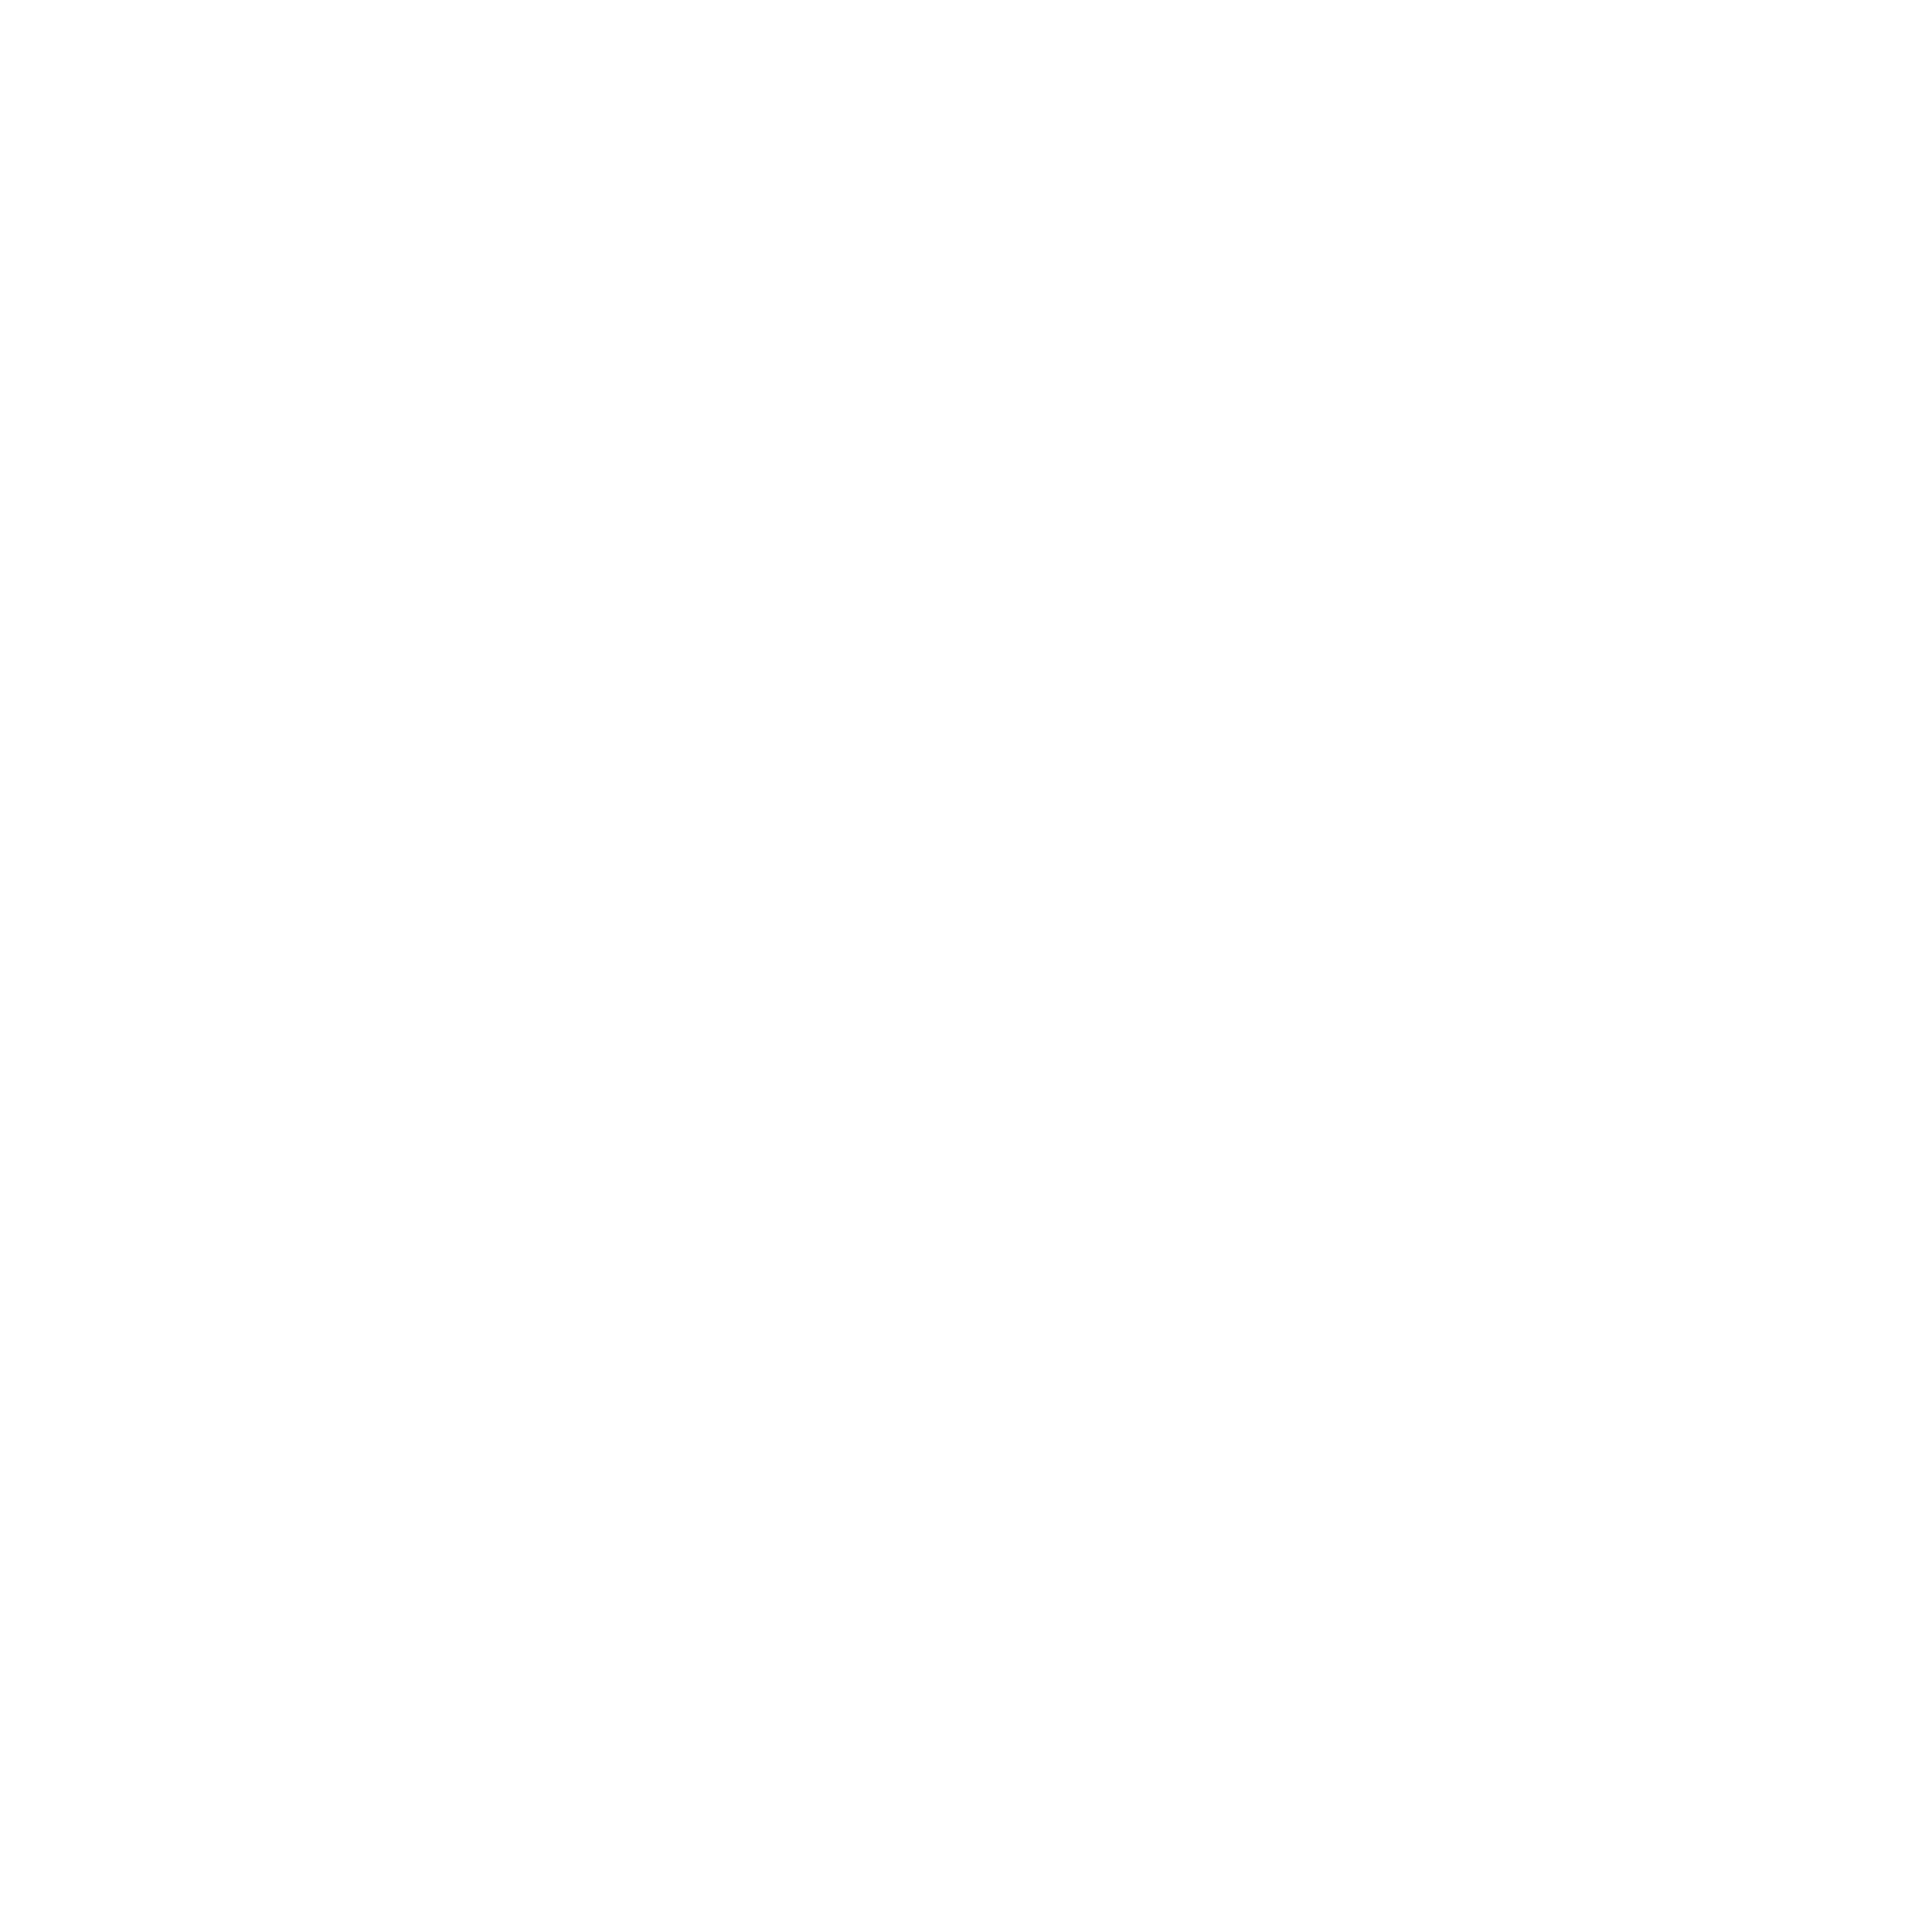 Manndeshi Champions